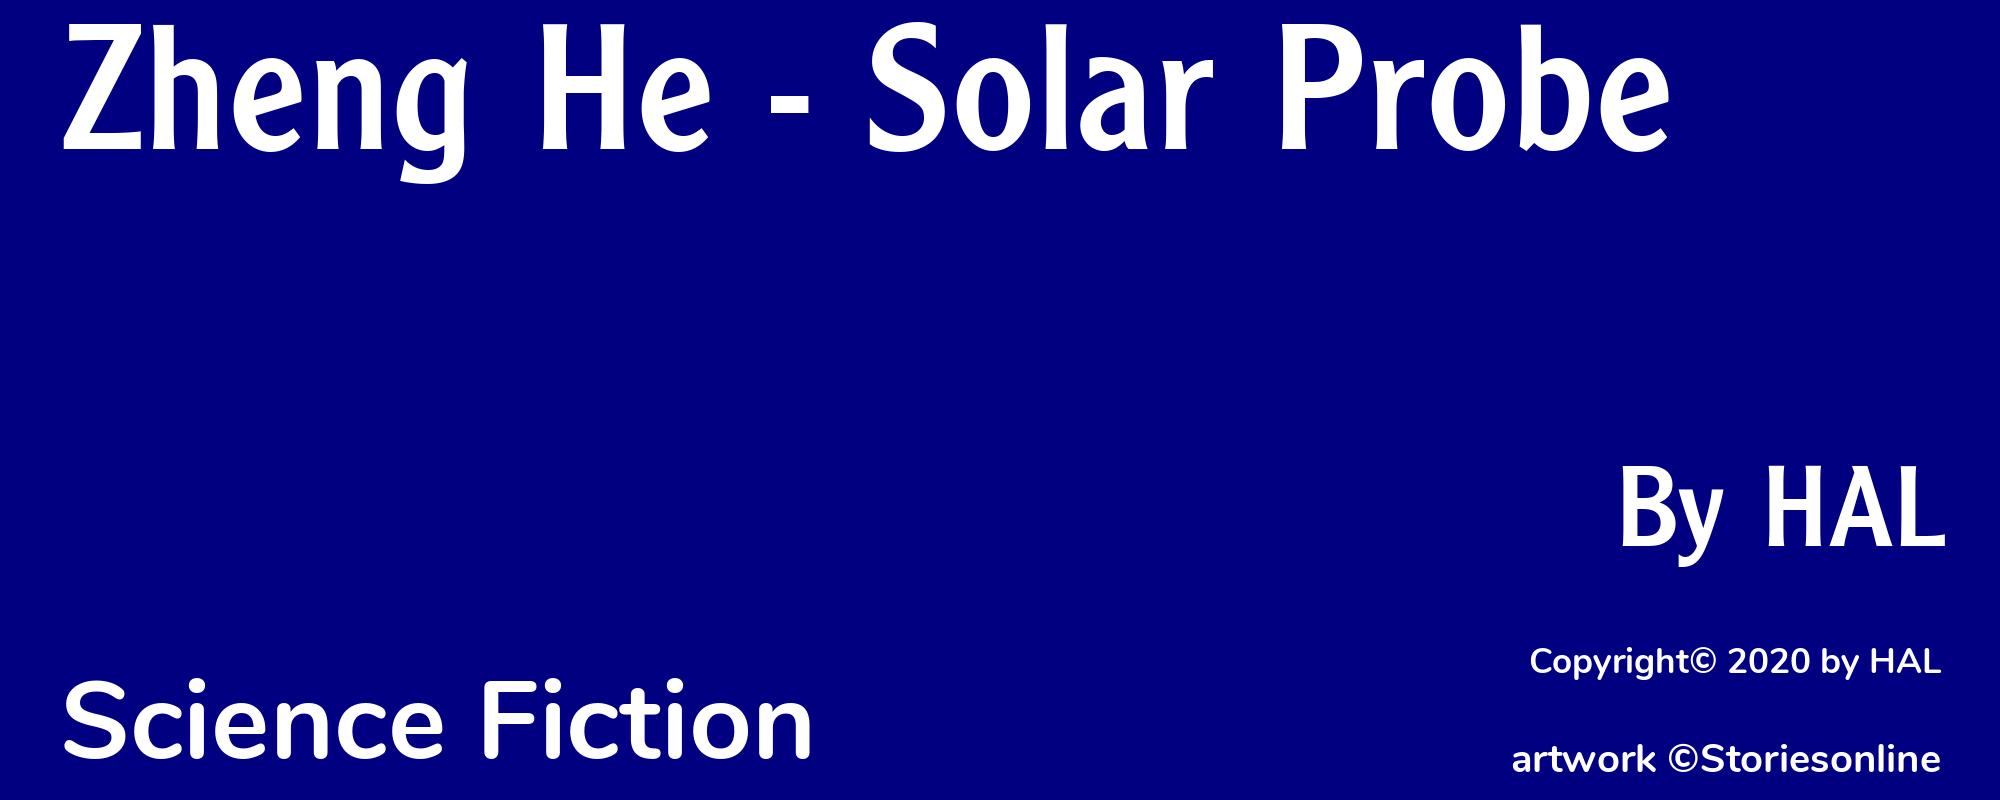 Zheng He - Solar Probe - Cover